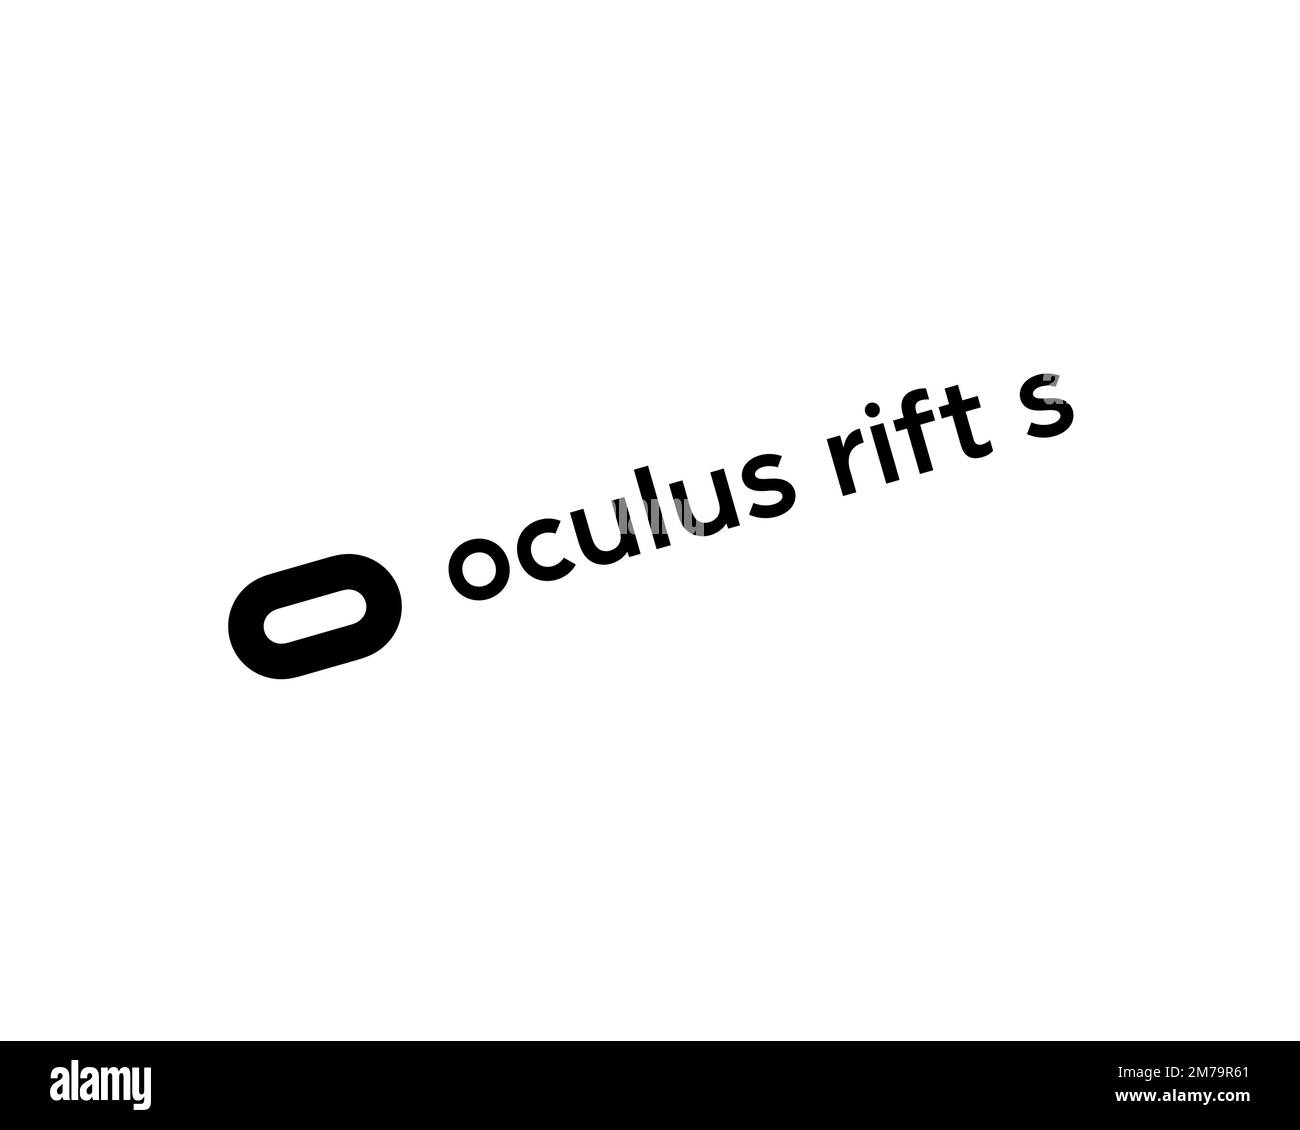 Oculus Rift S, logo ruotato, sfondo bianco Foto Stock